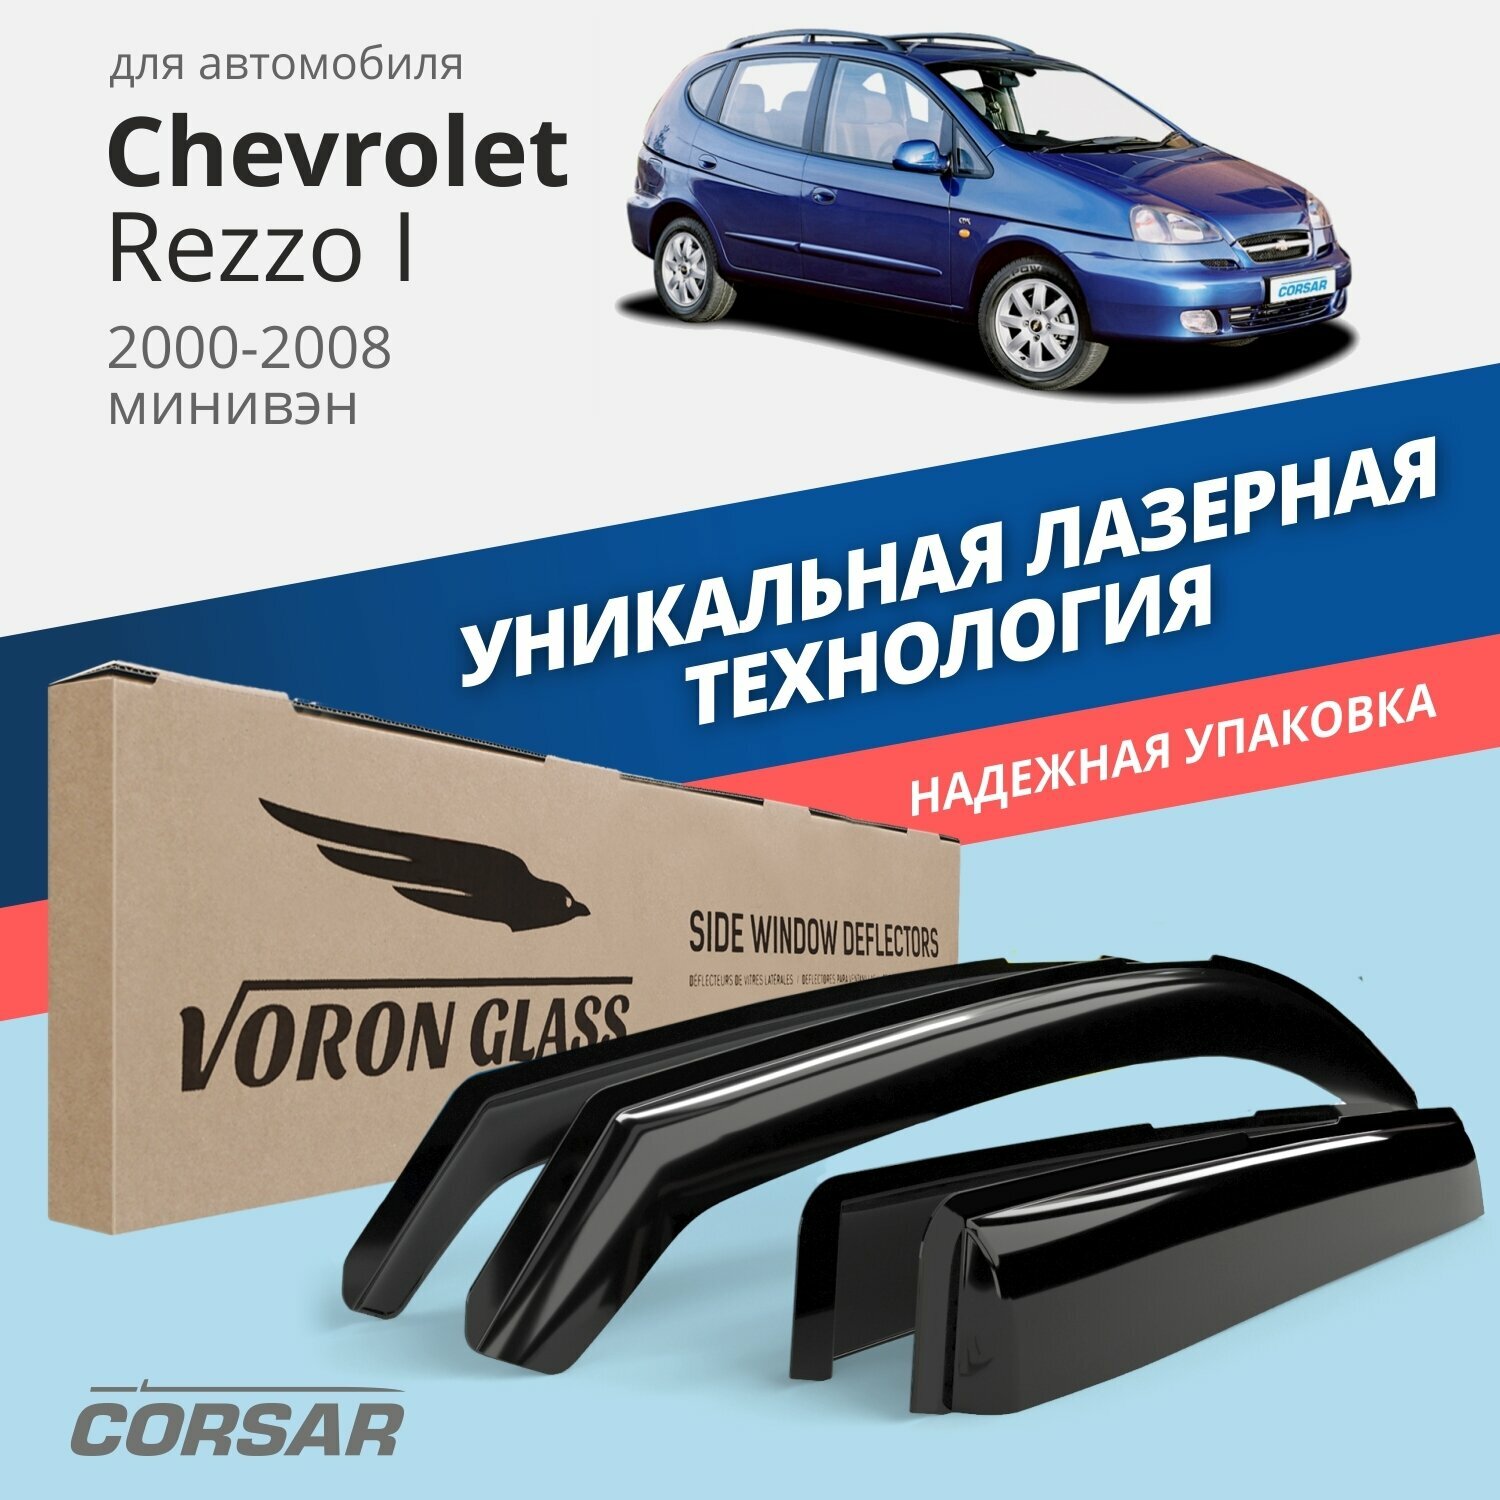 Дефлекторы окон Voron Glass серия Corsar для Chevrolet Rezzo I 2000-2008 накладные 4 шт.